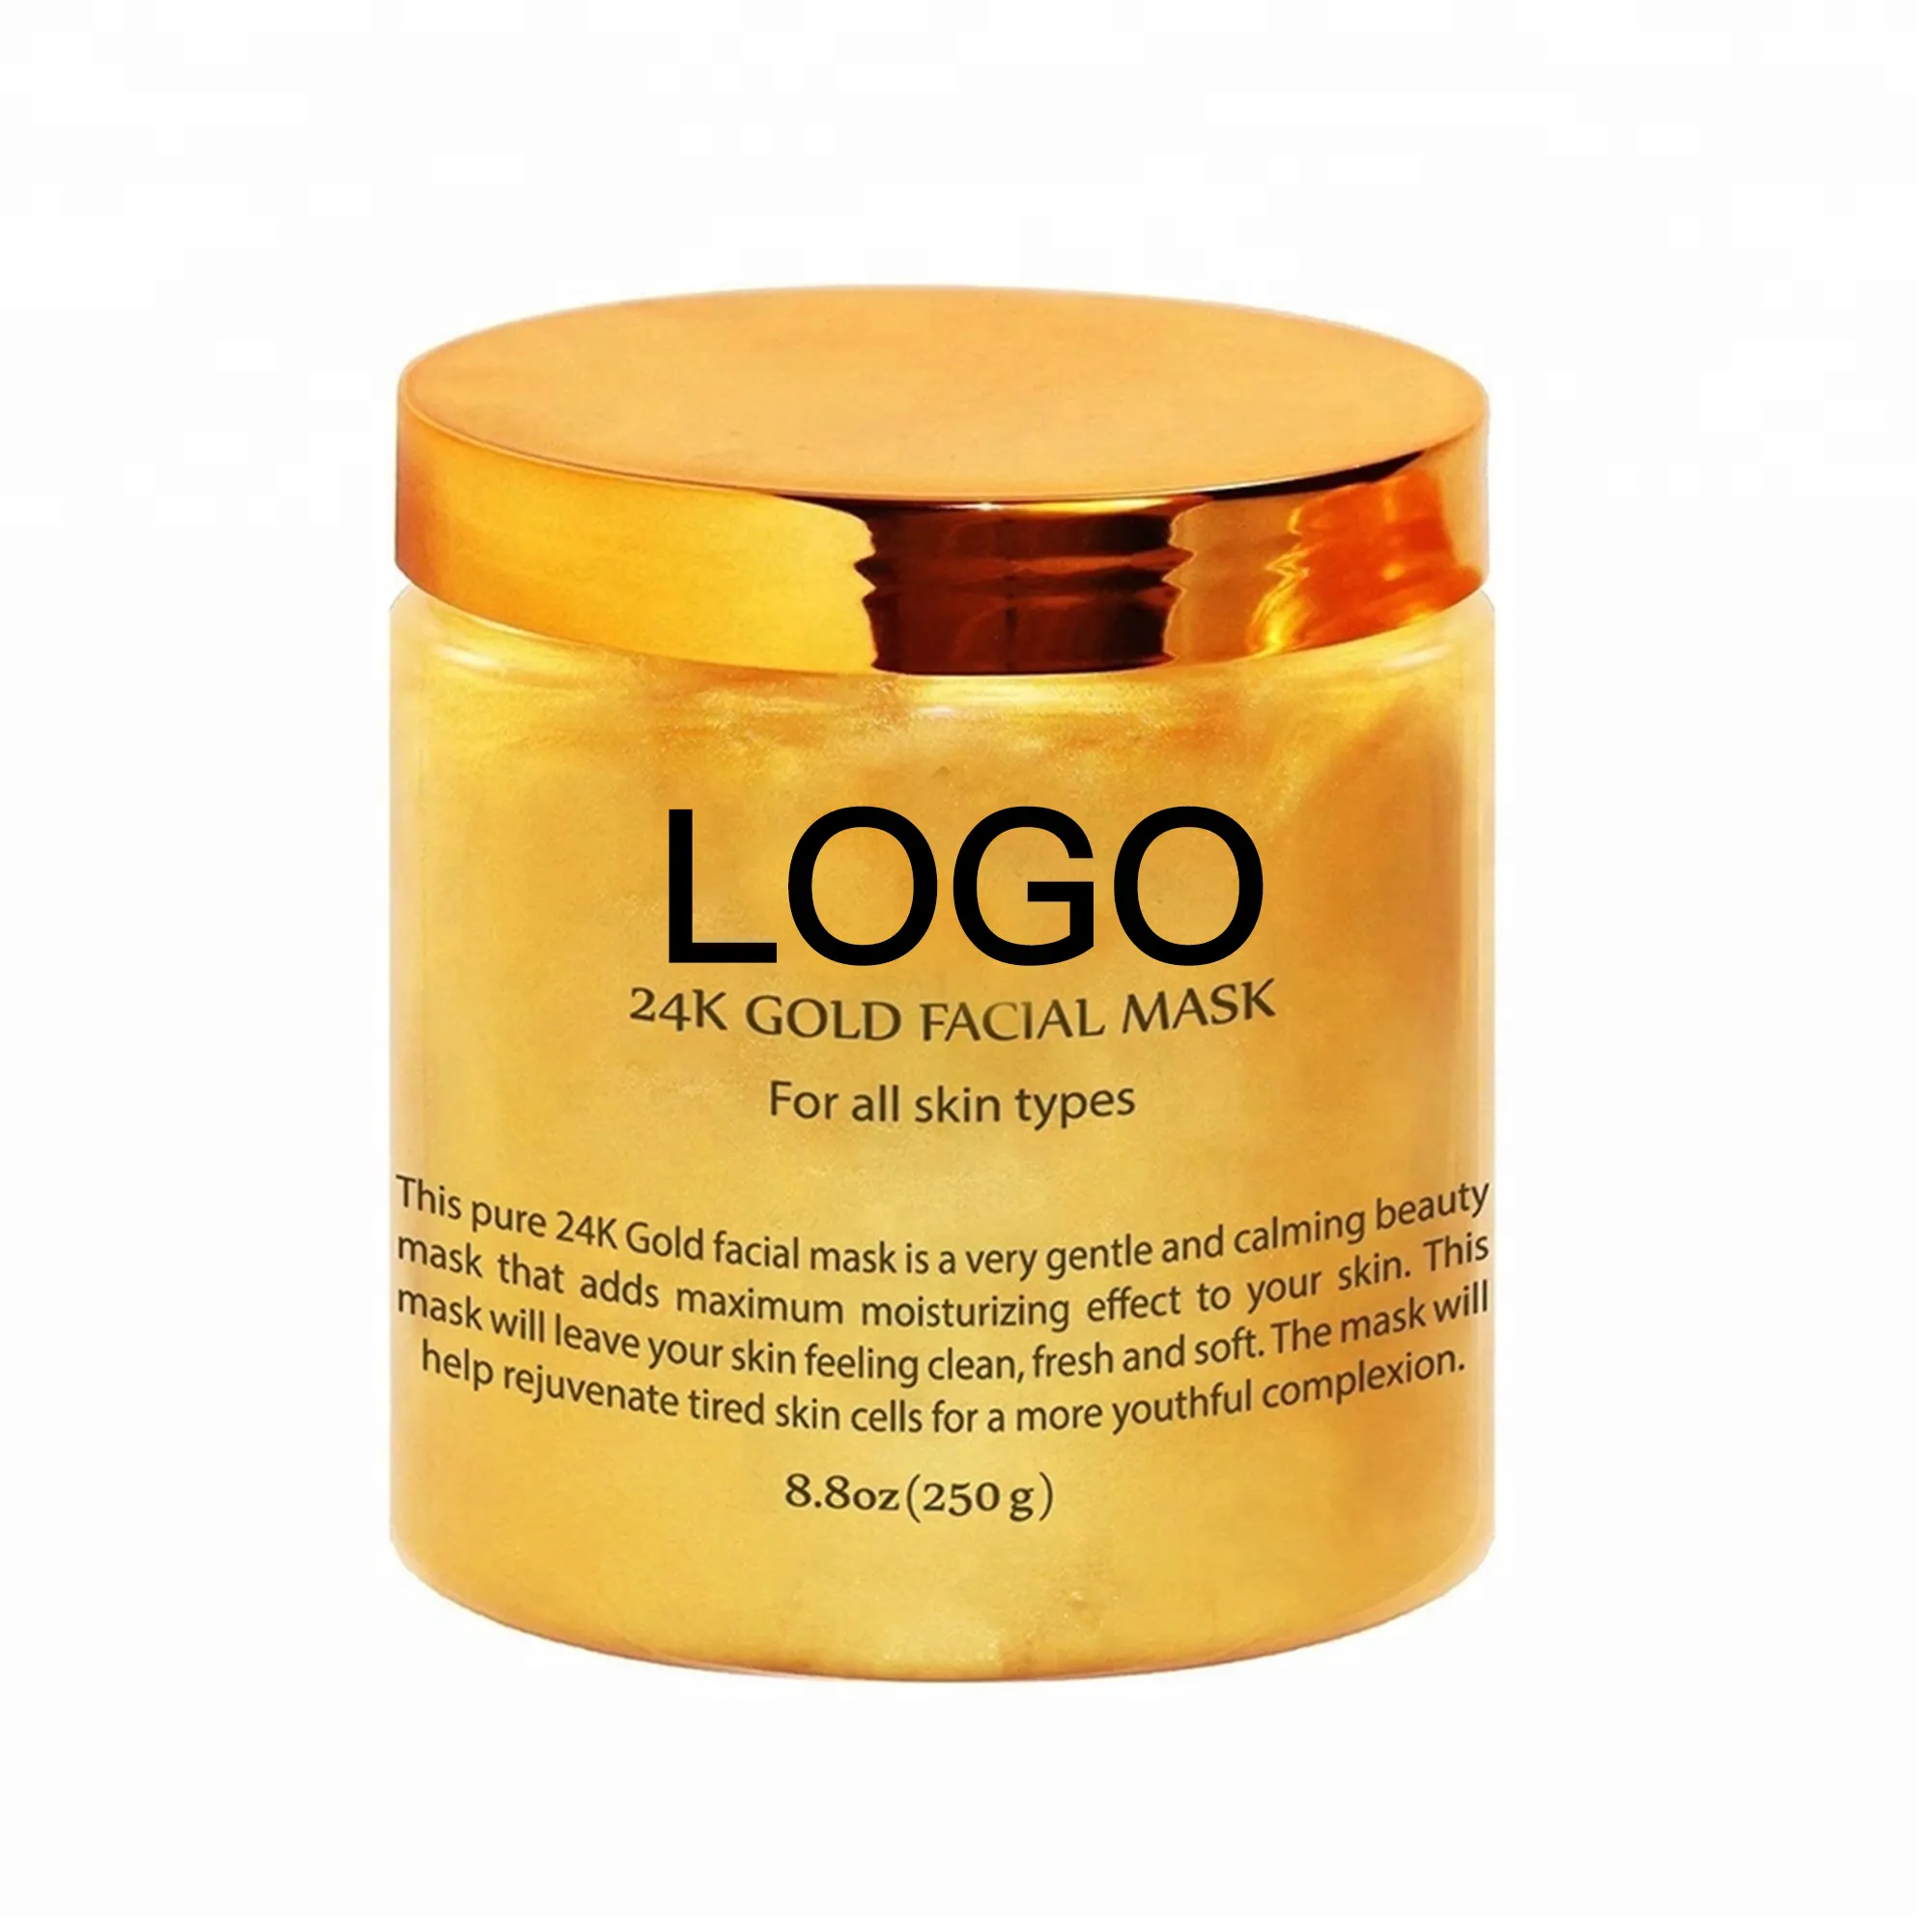 Crema facial para tratamiento facial, mascarilla de oro de 24 quilates, antiarrugas, con etiqueta privada